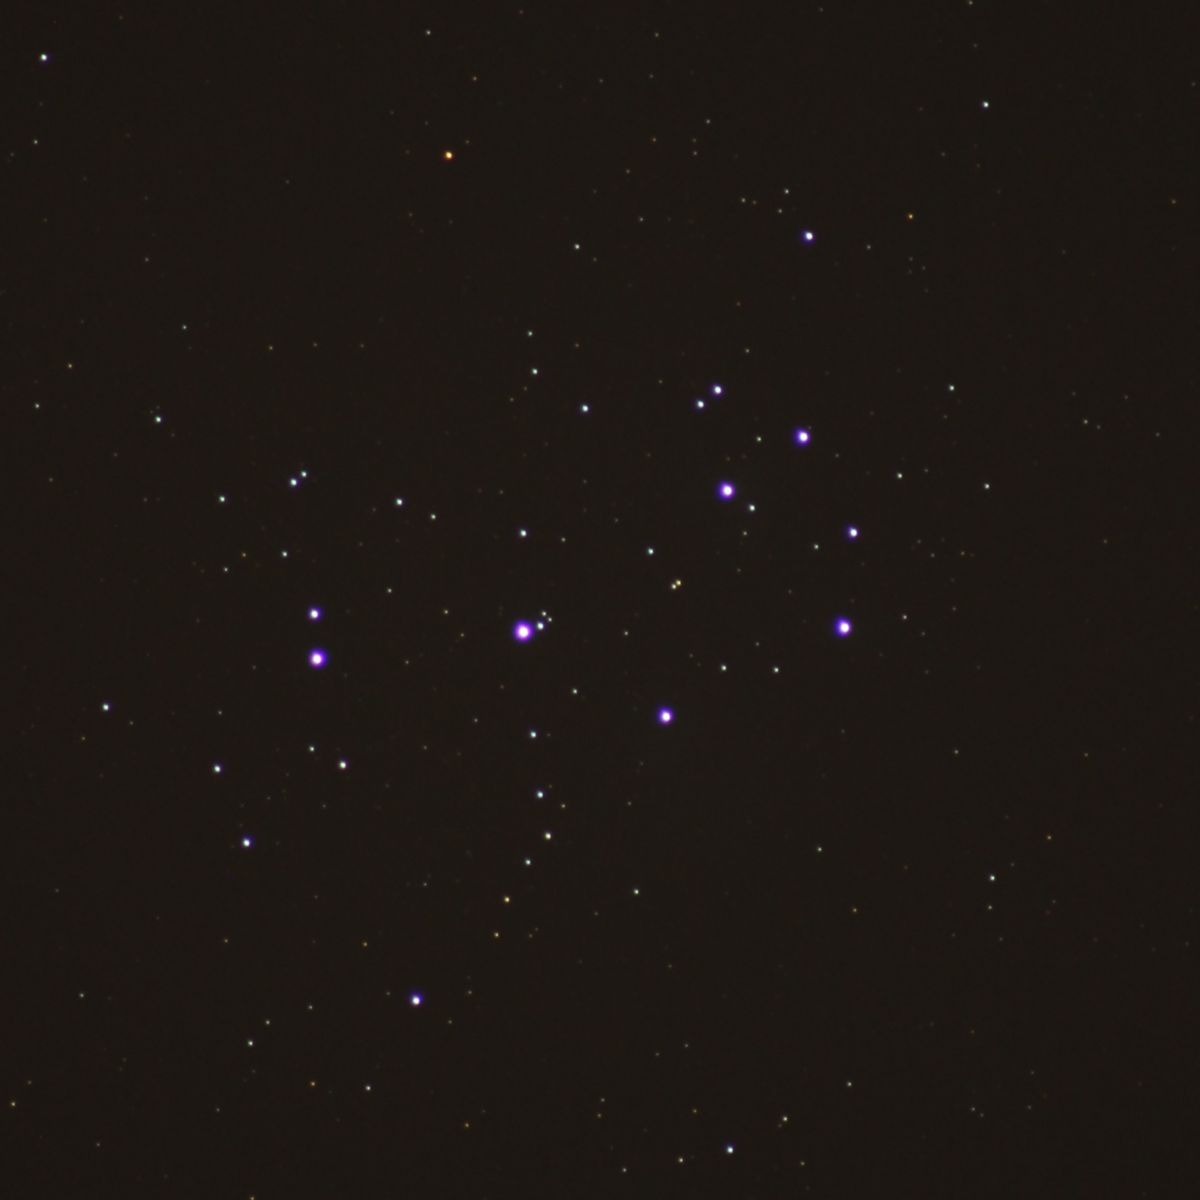 M45 The Pleiades 22.11.2015